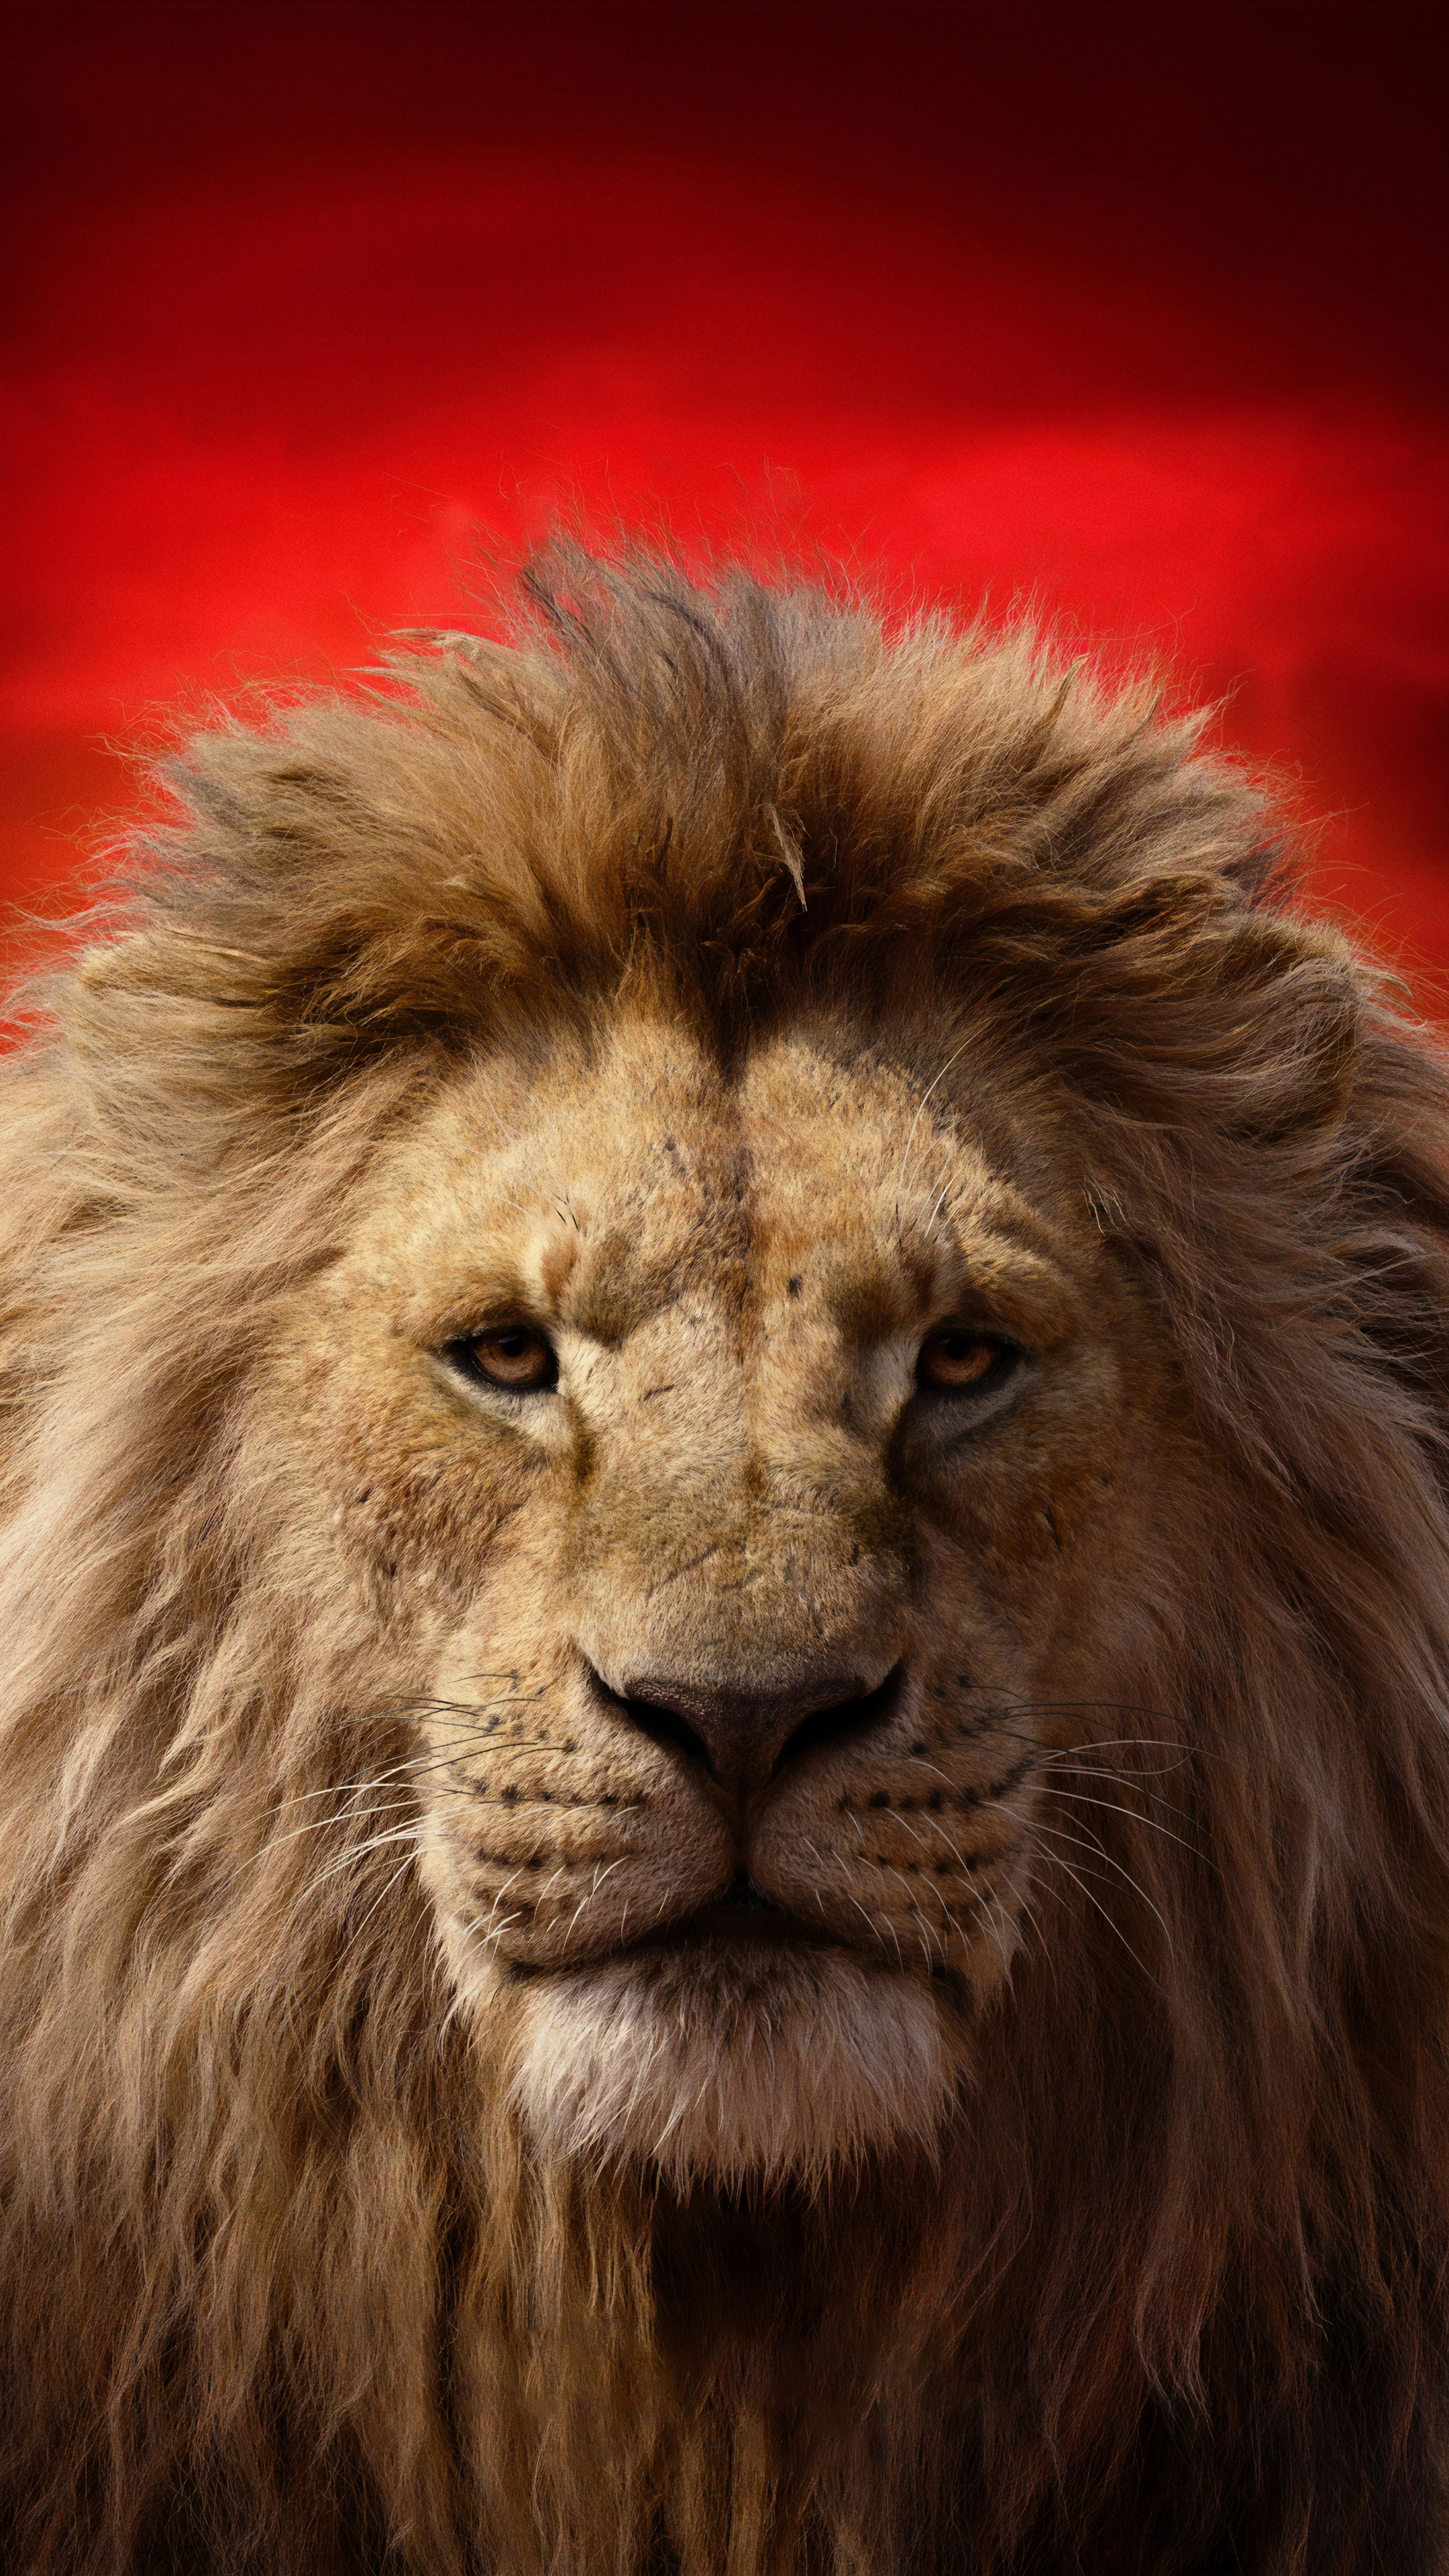 The Lion King, James Earl Jones as Mufasa, Stunning 4K imagery, Iconic characters, 2160x3840 4K Phone